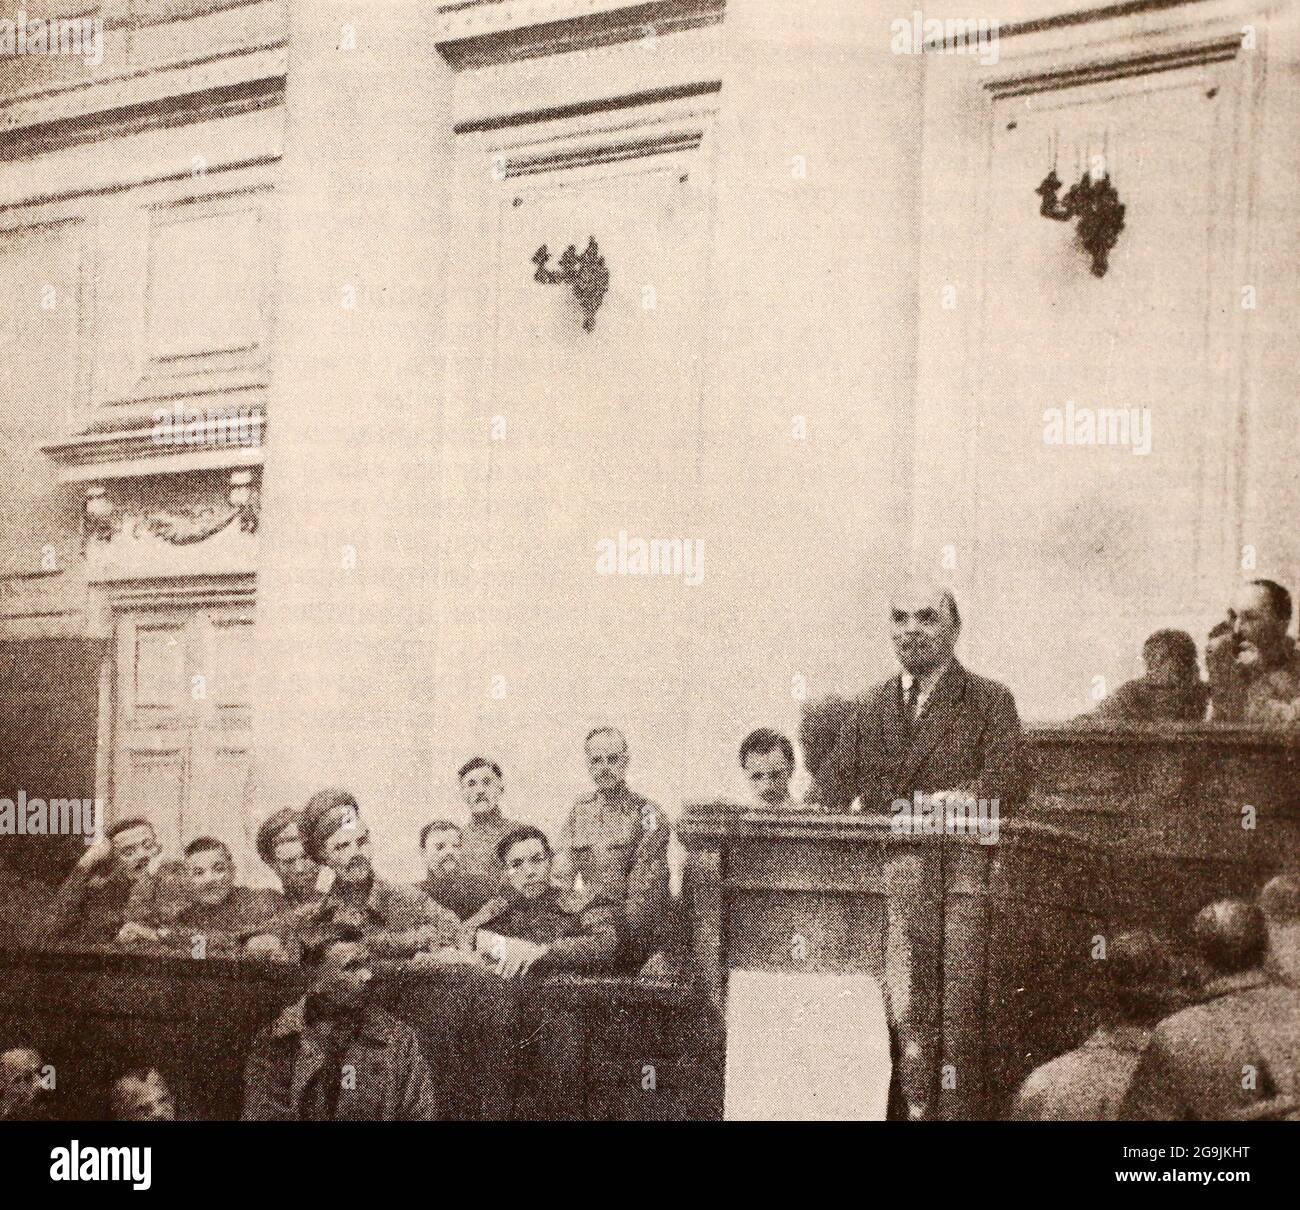 Vladimir Lenin's speech at the Tauride Palace on April 4, 1917. Stock Photo